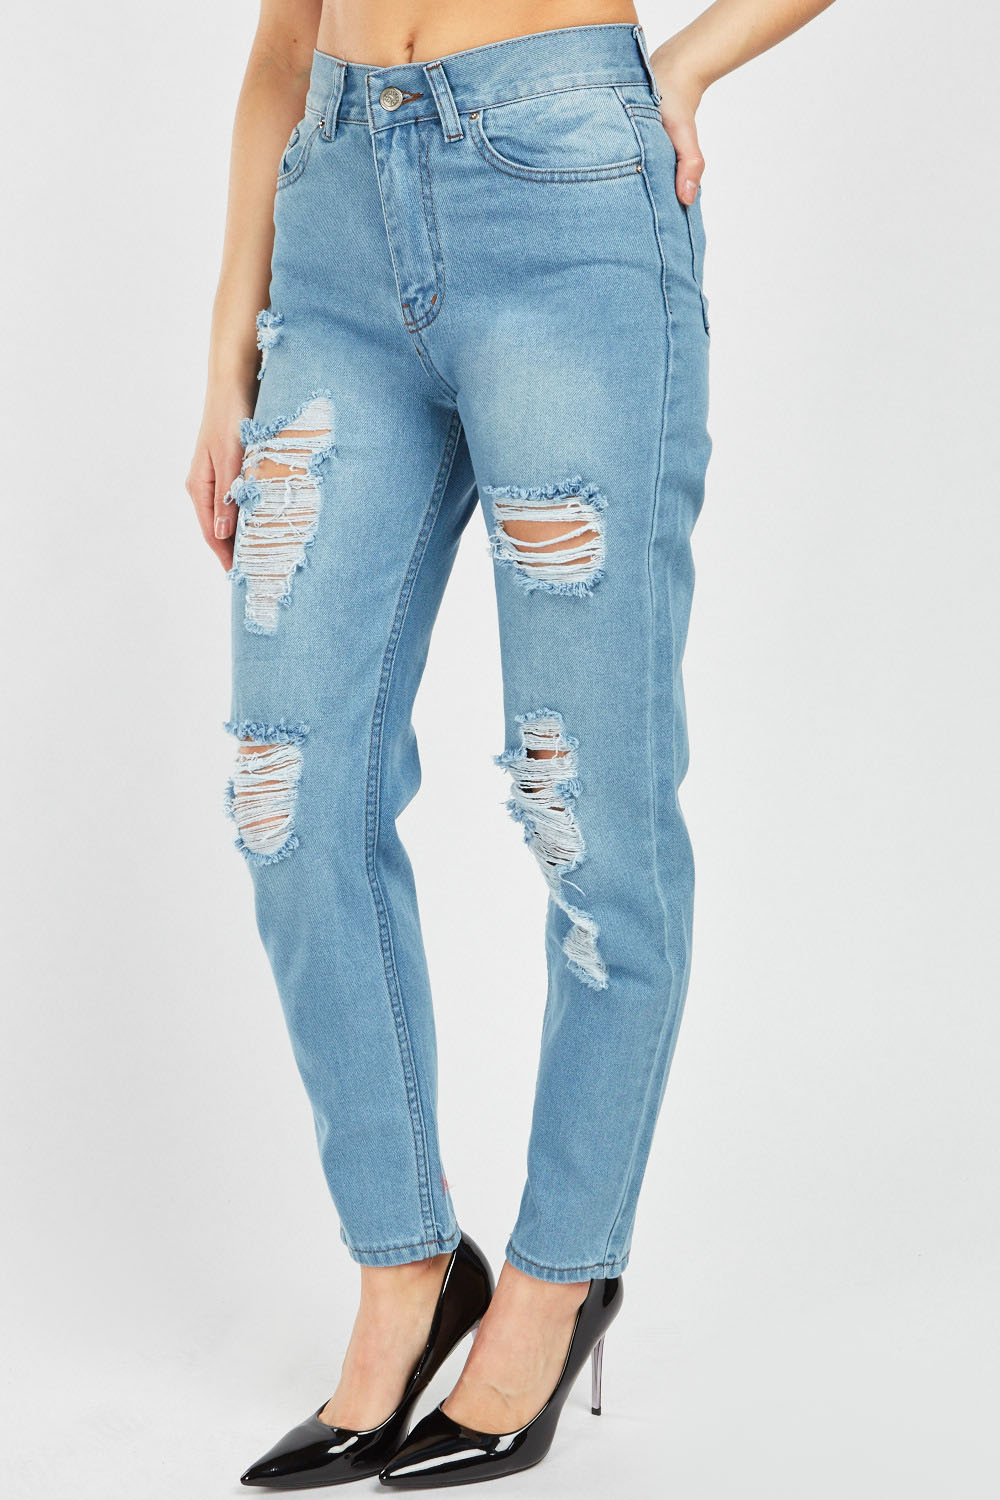 Light Blue Distressed Mom Jeans - Just $7